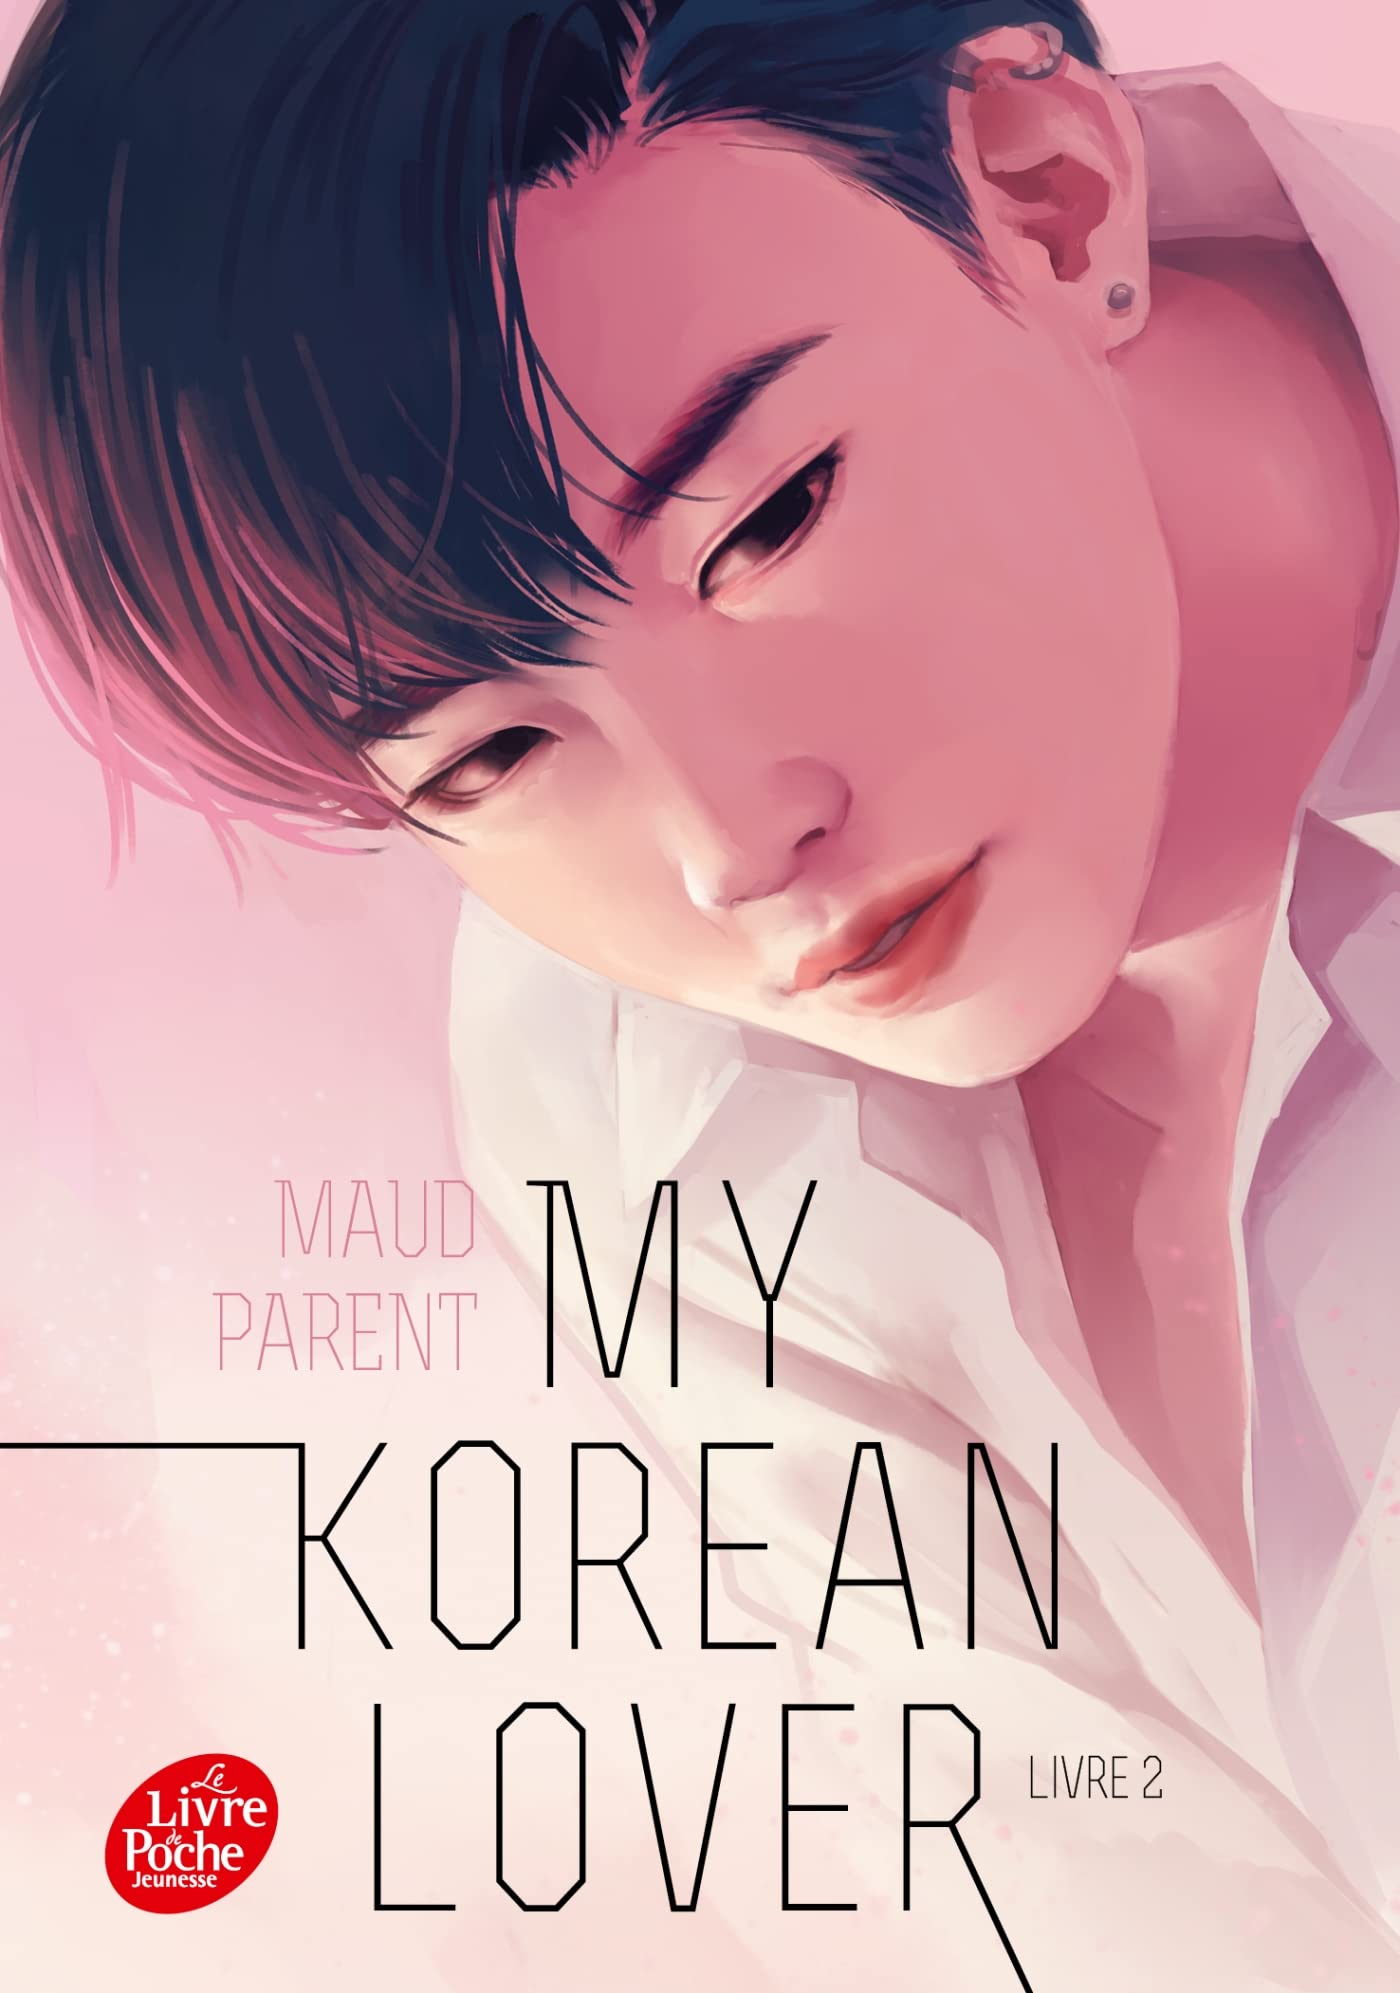 My Korean lover. Vol. 2